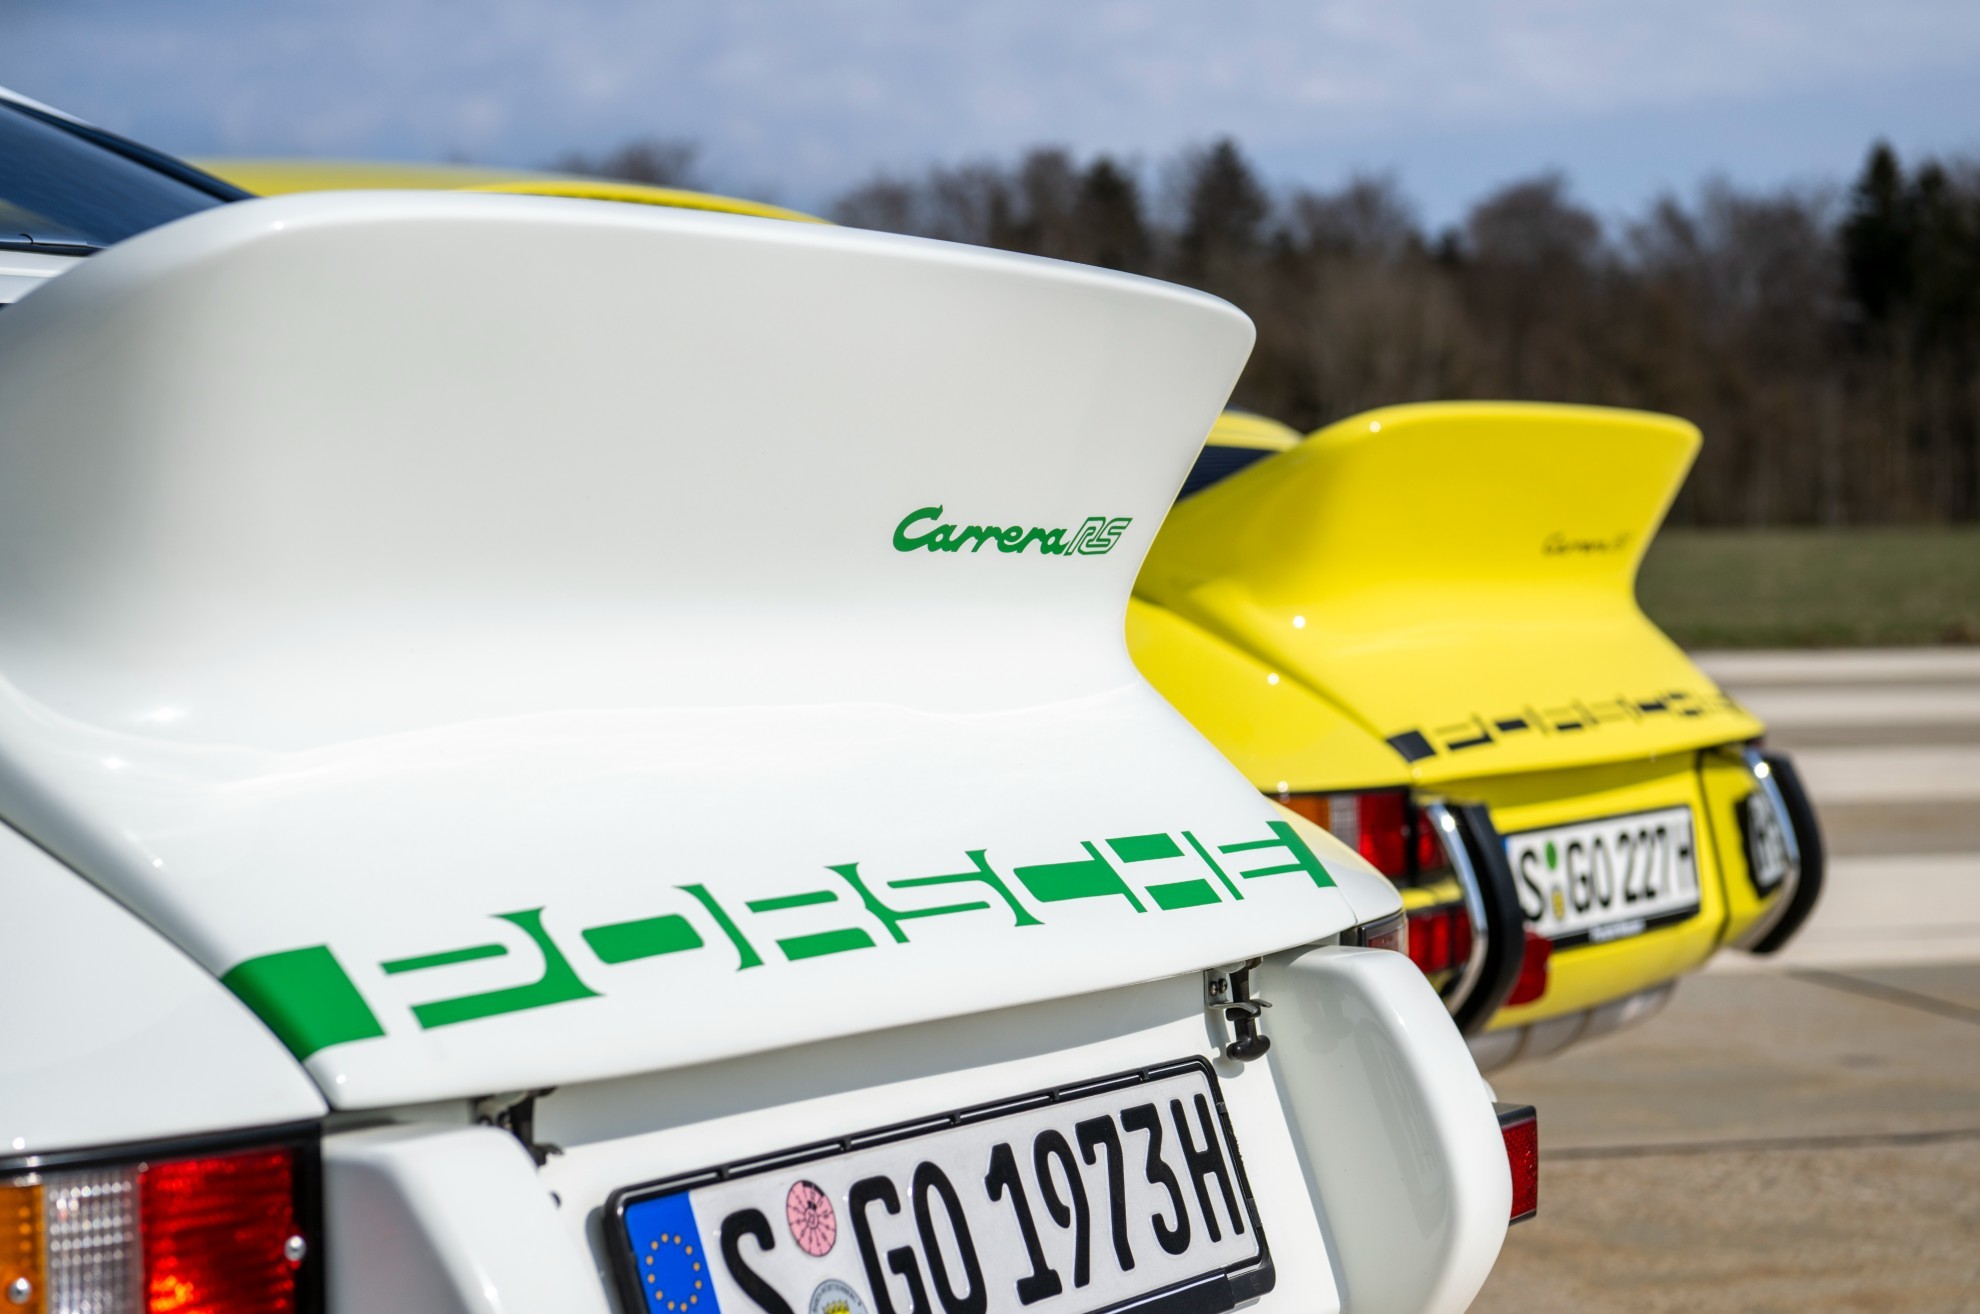 Porsche 911 Carrera RS 2.7 - coches deportivos - prueba - contacto